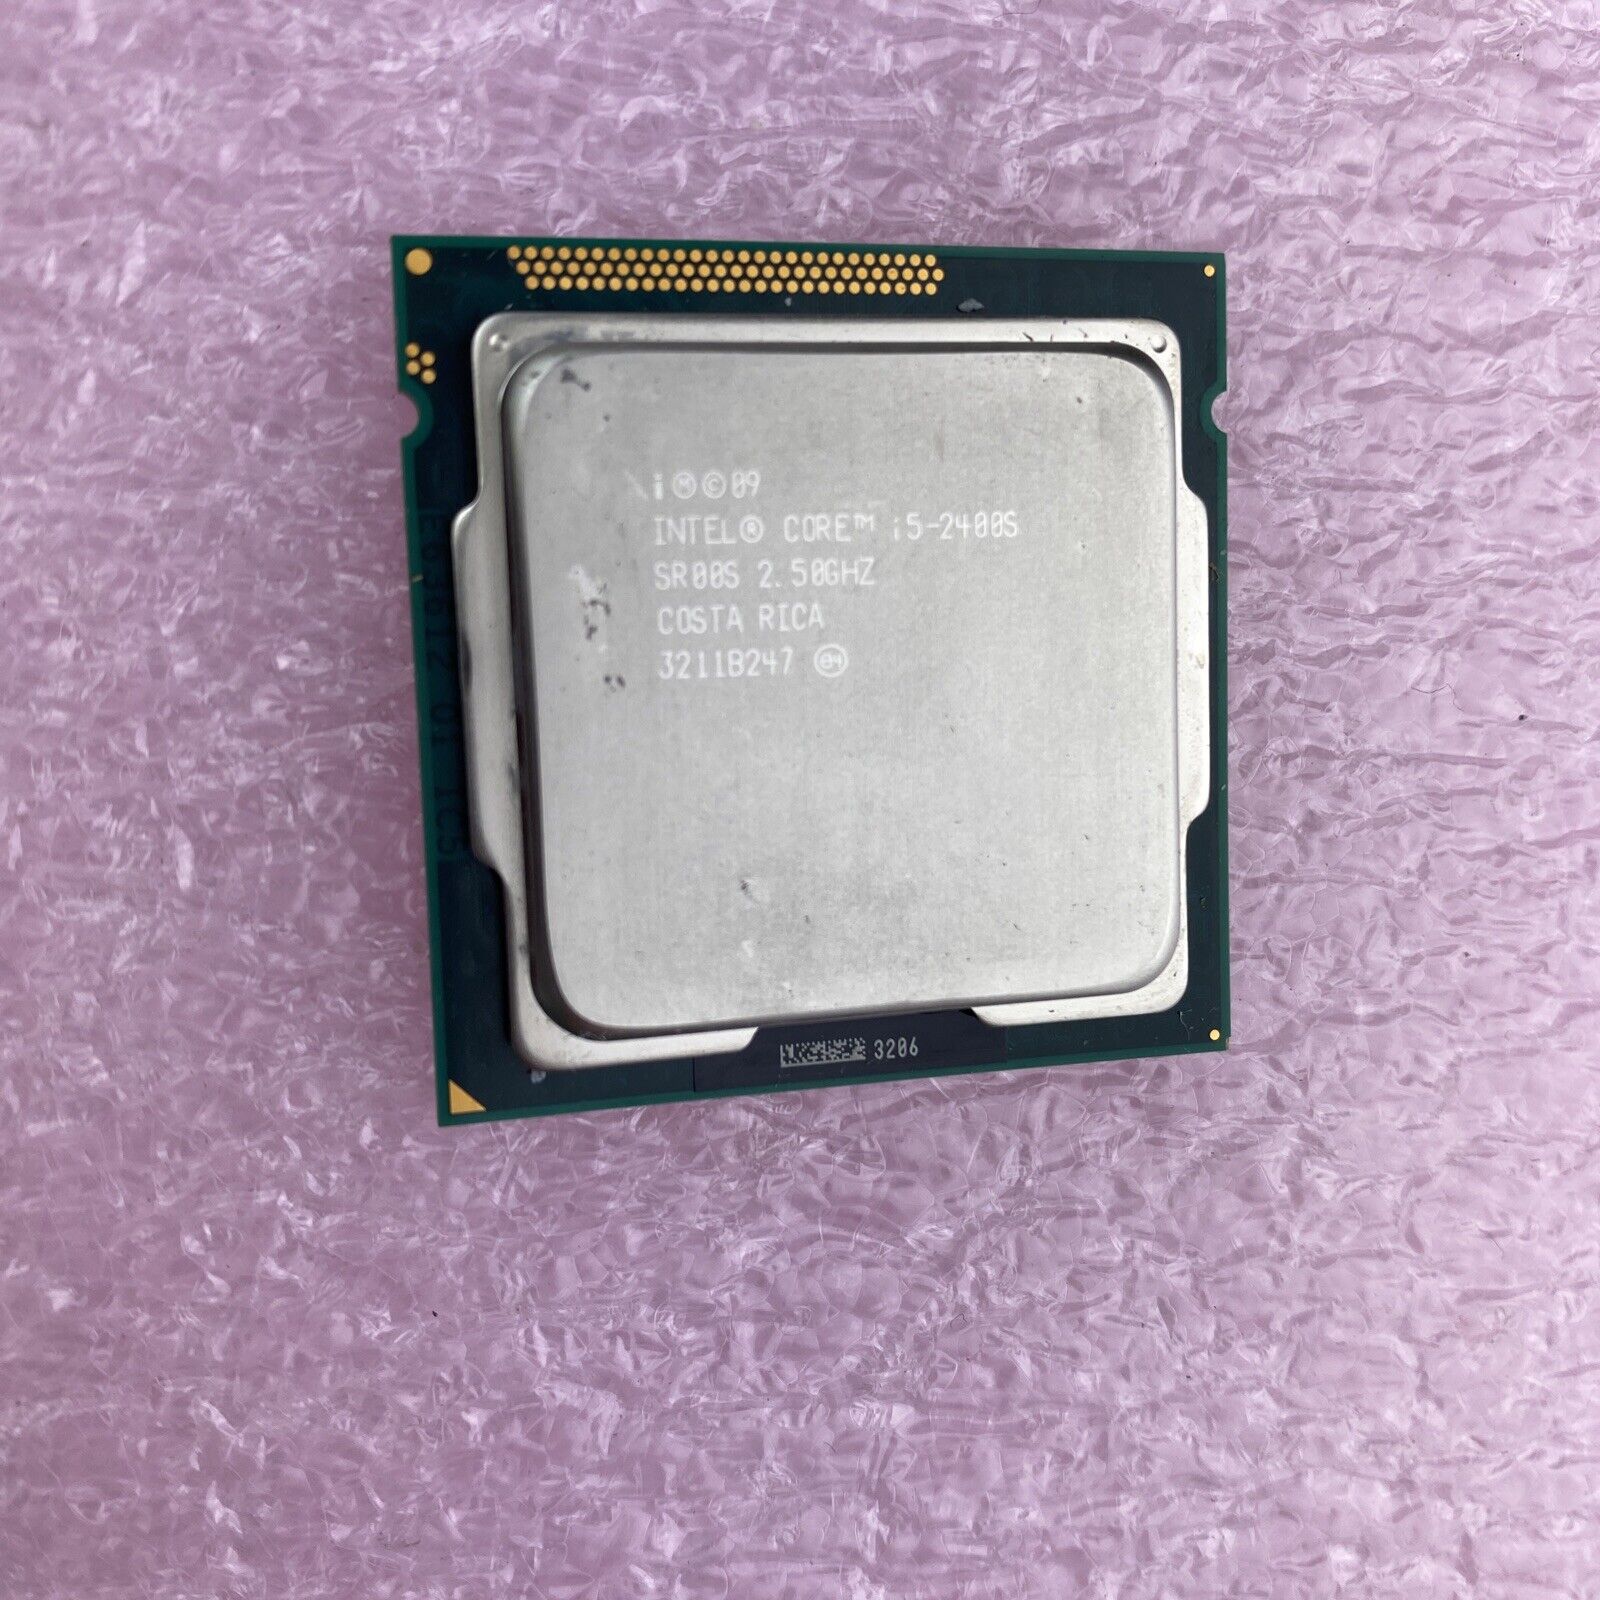 Intel SR00S Core i5-2400S 2.5GHz LGA 1155/Socket H2 5 GT/s CPU